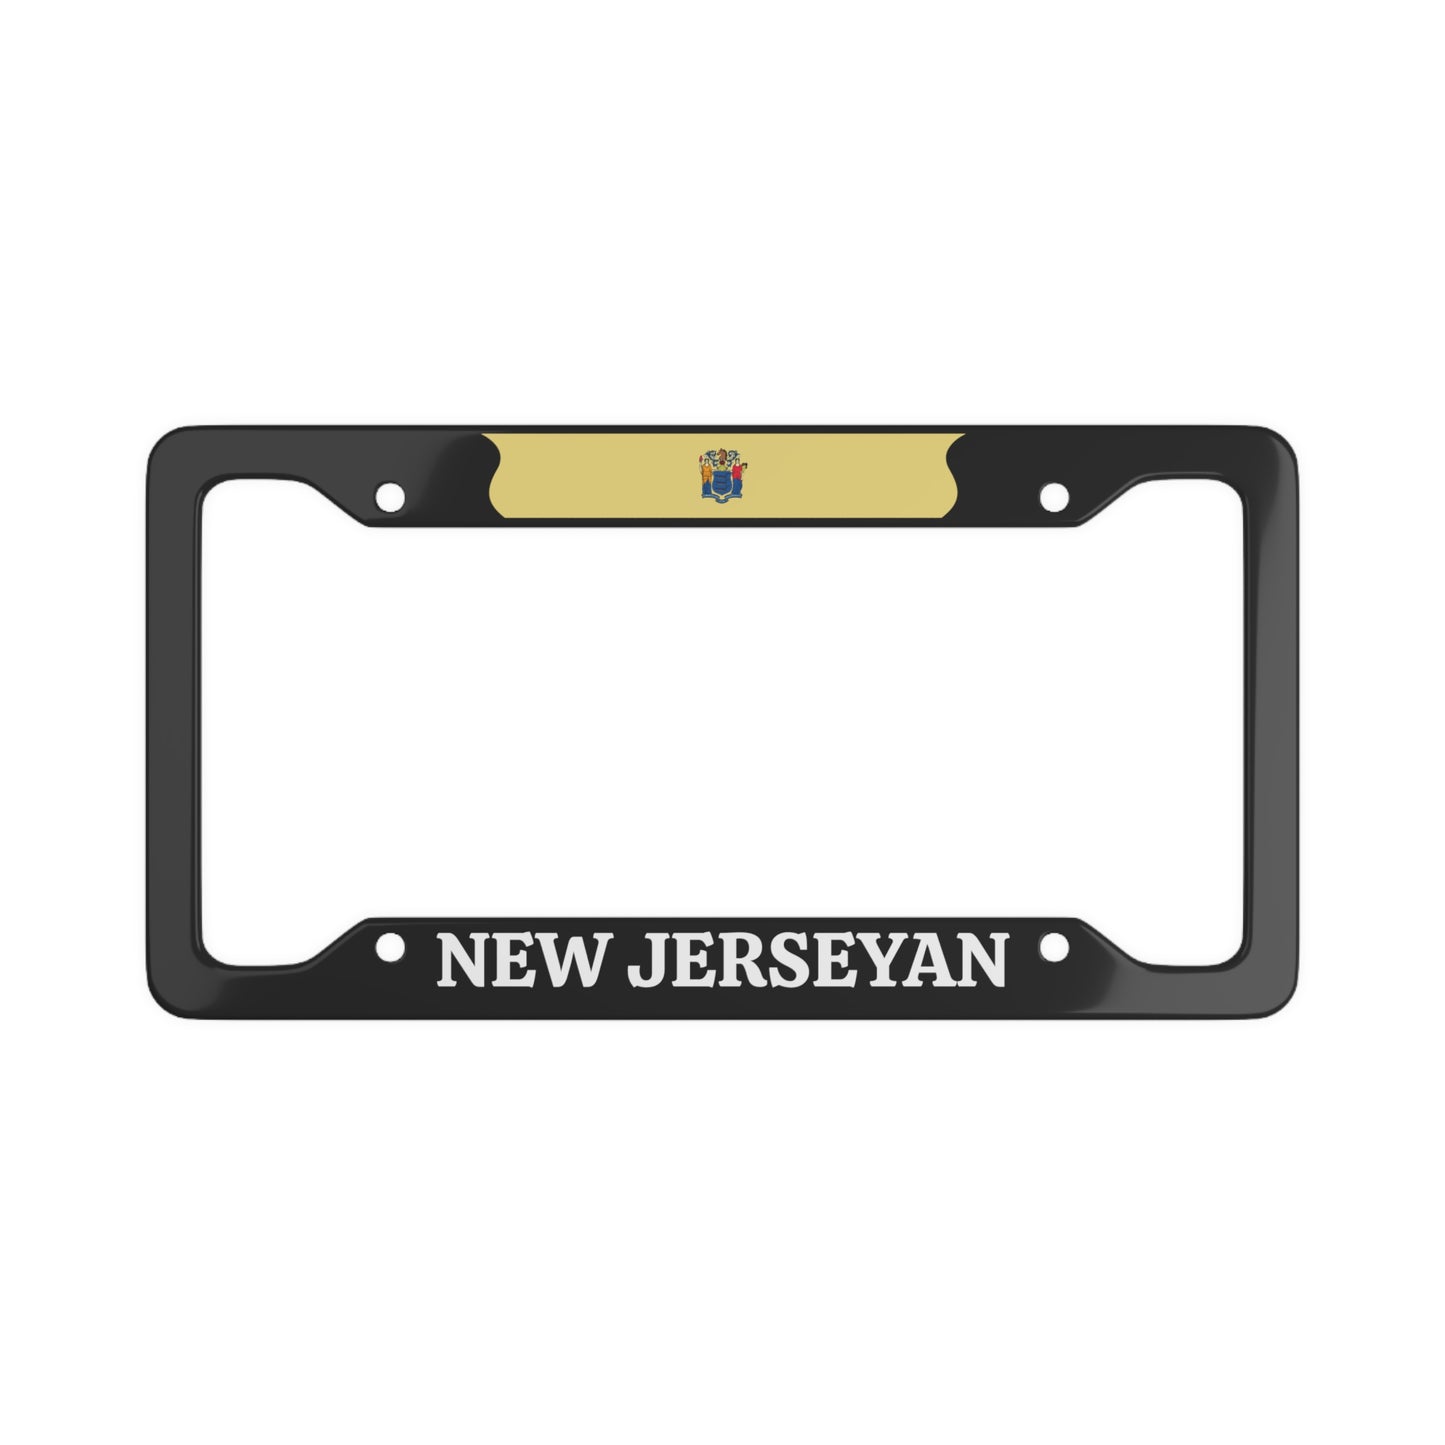 New Jerseyan, New Jersey State, USA License Plate Frame